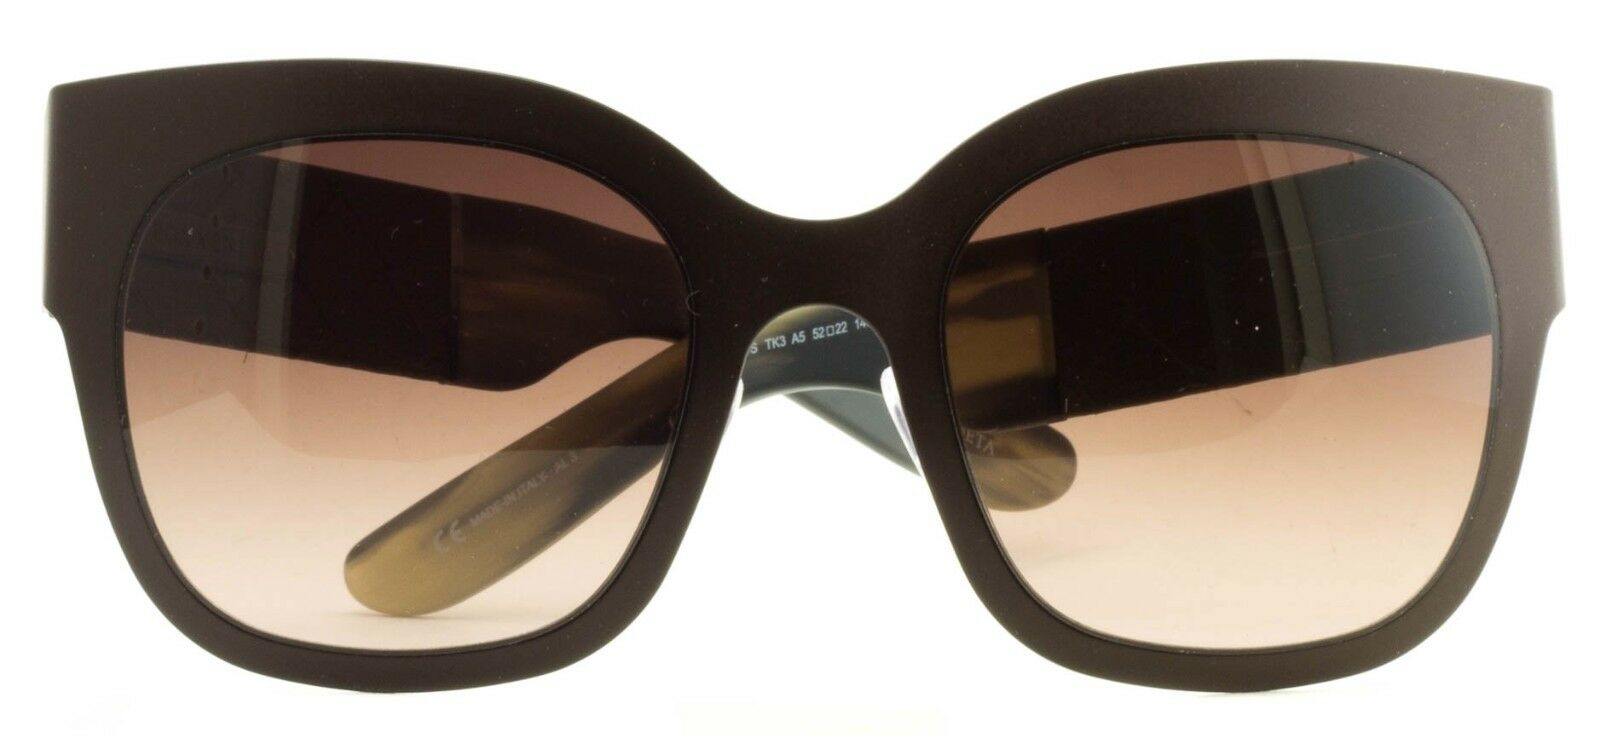 BOTTEGA VENETA B. V 303S TK3 A5 Sunglasses Shades FRAMES Eyewear New - BNIB